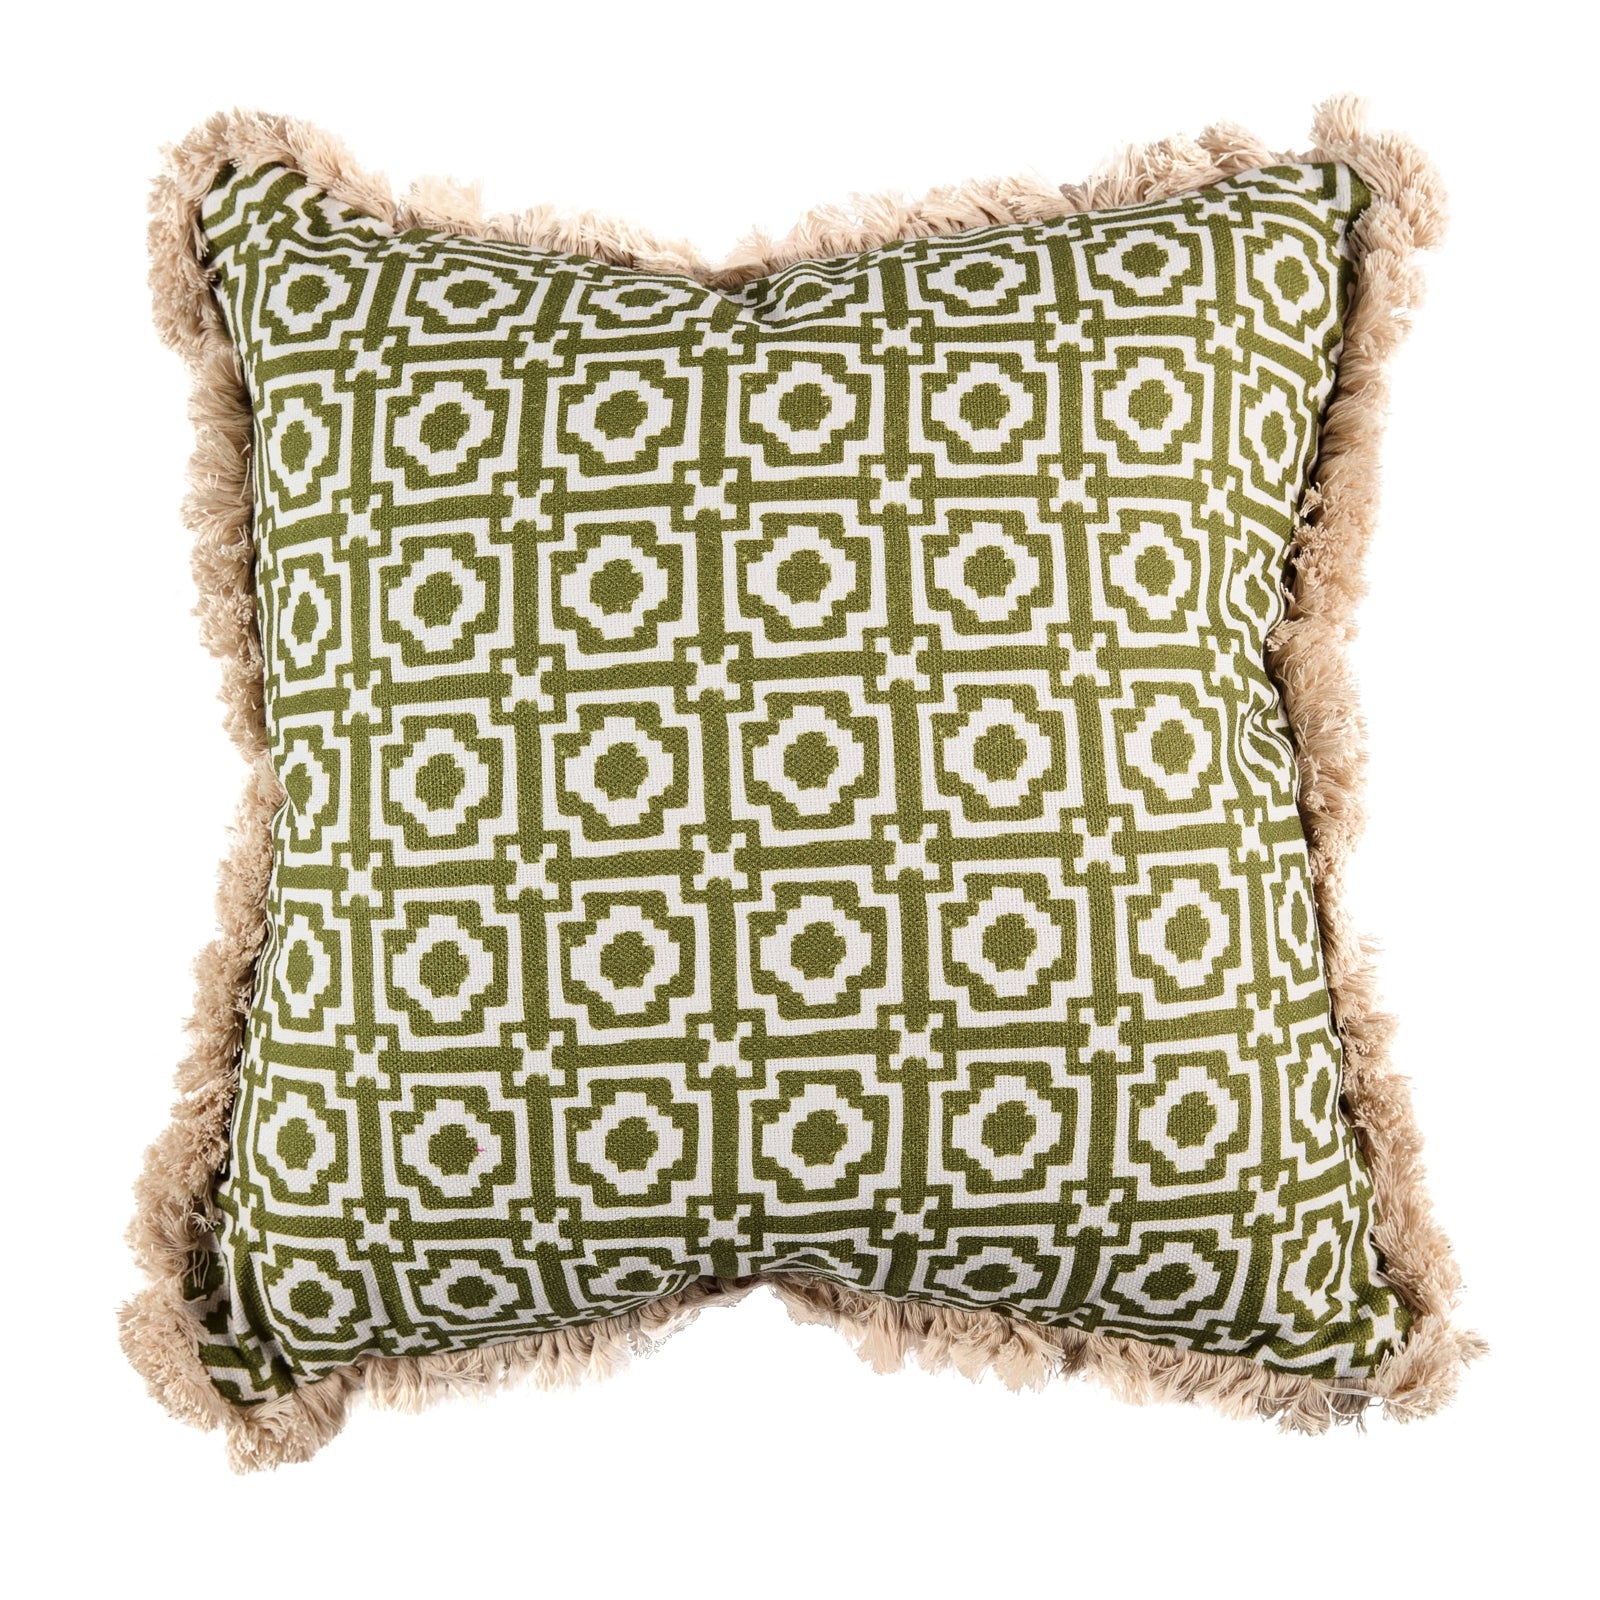 Alotablots cushion in Peridot with Peridot velvet back and cream fringe